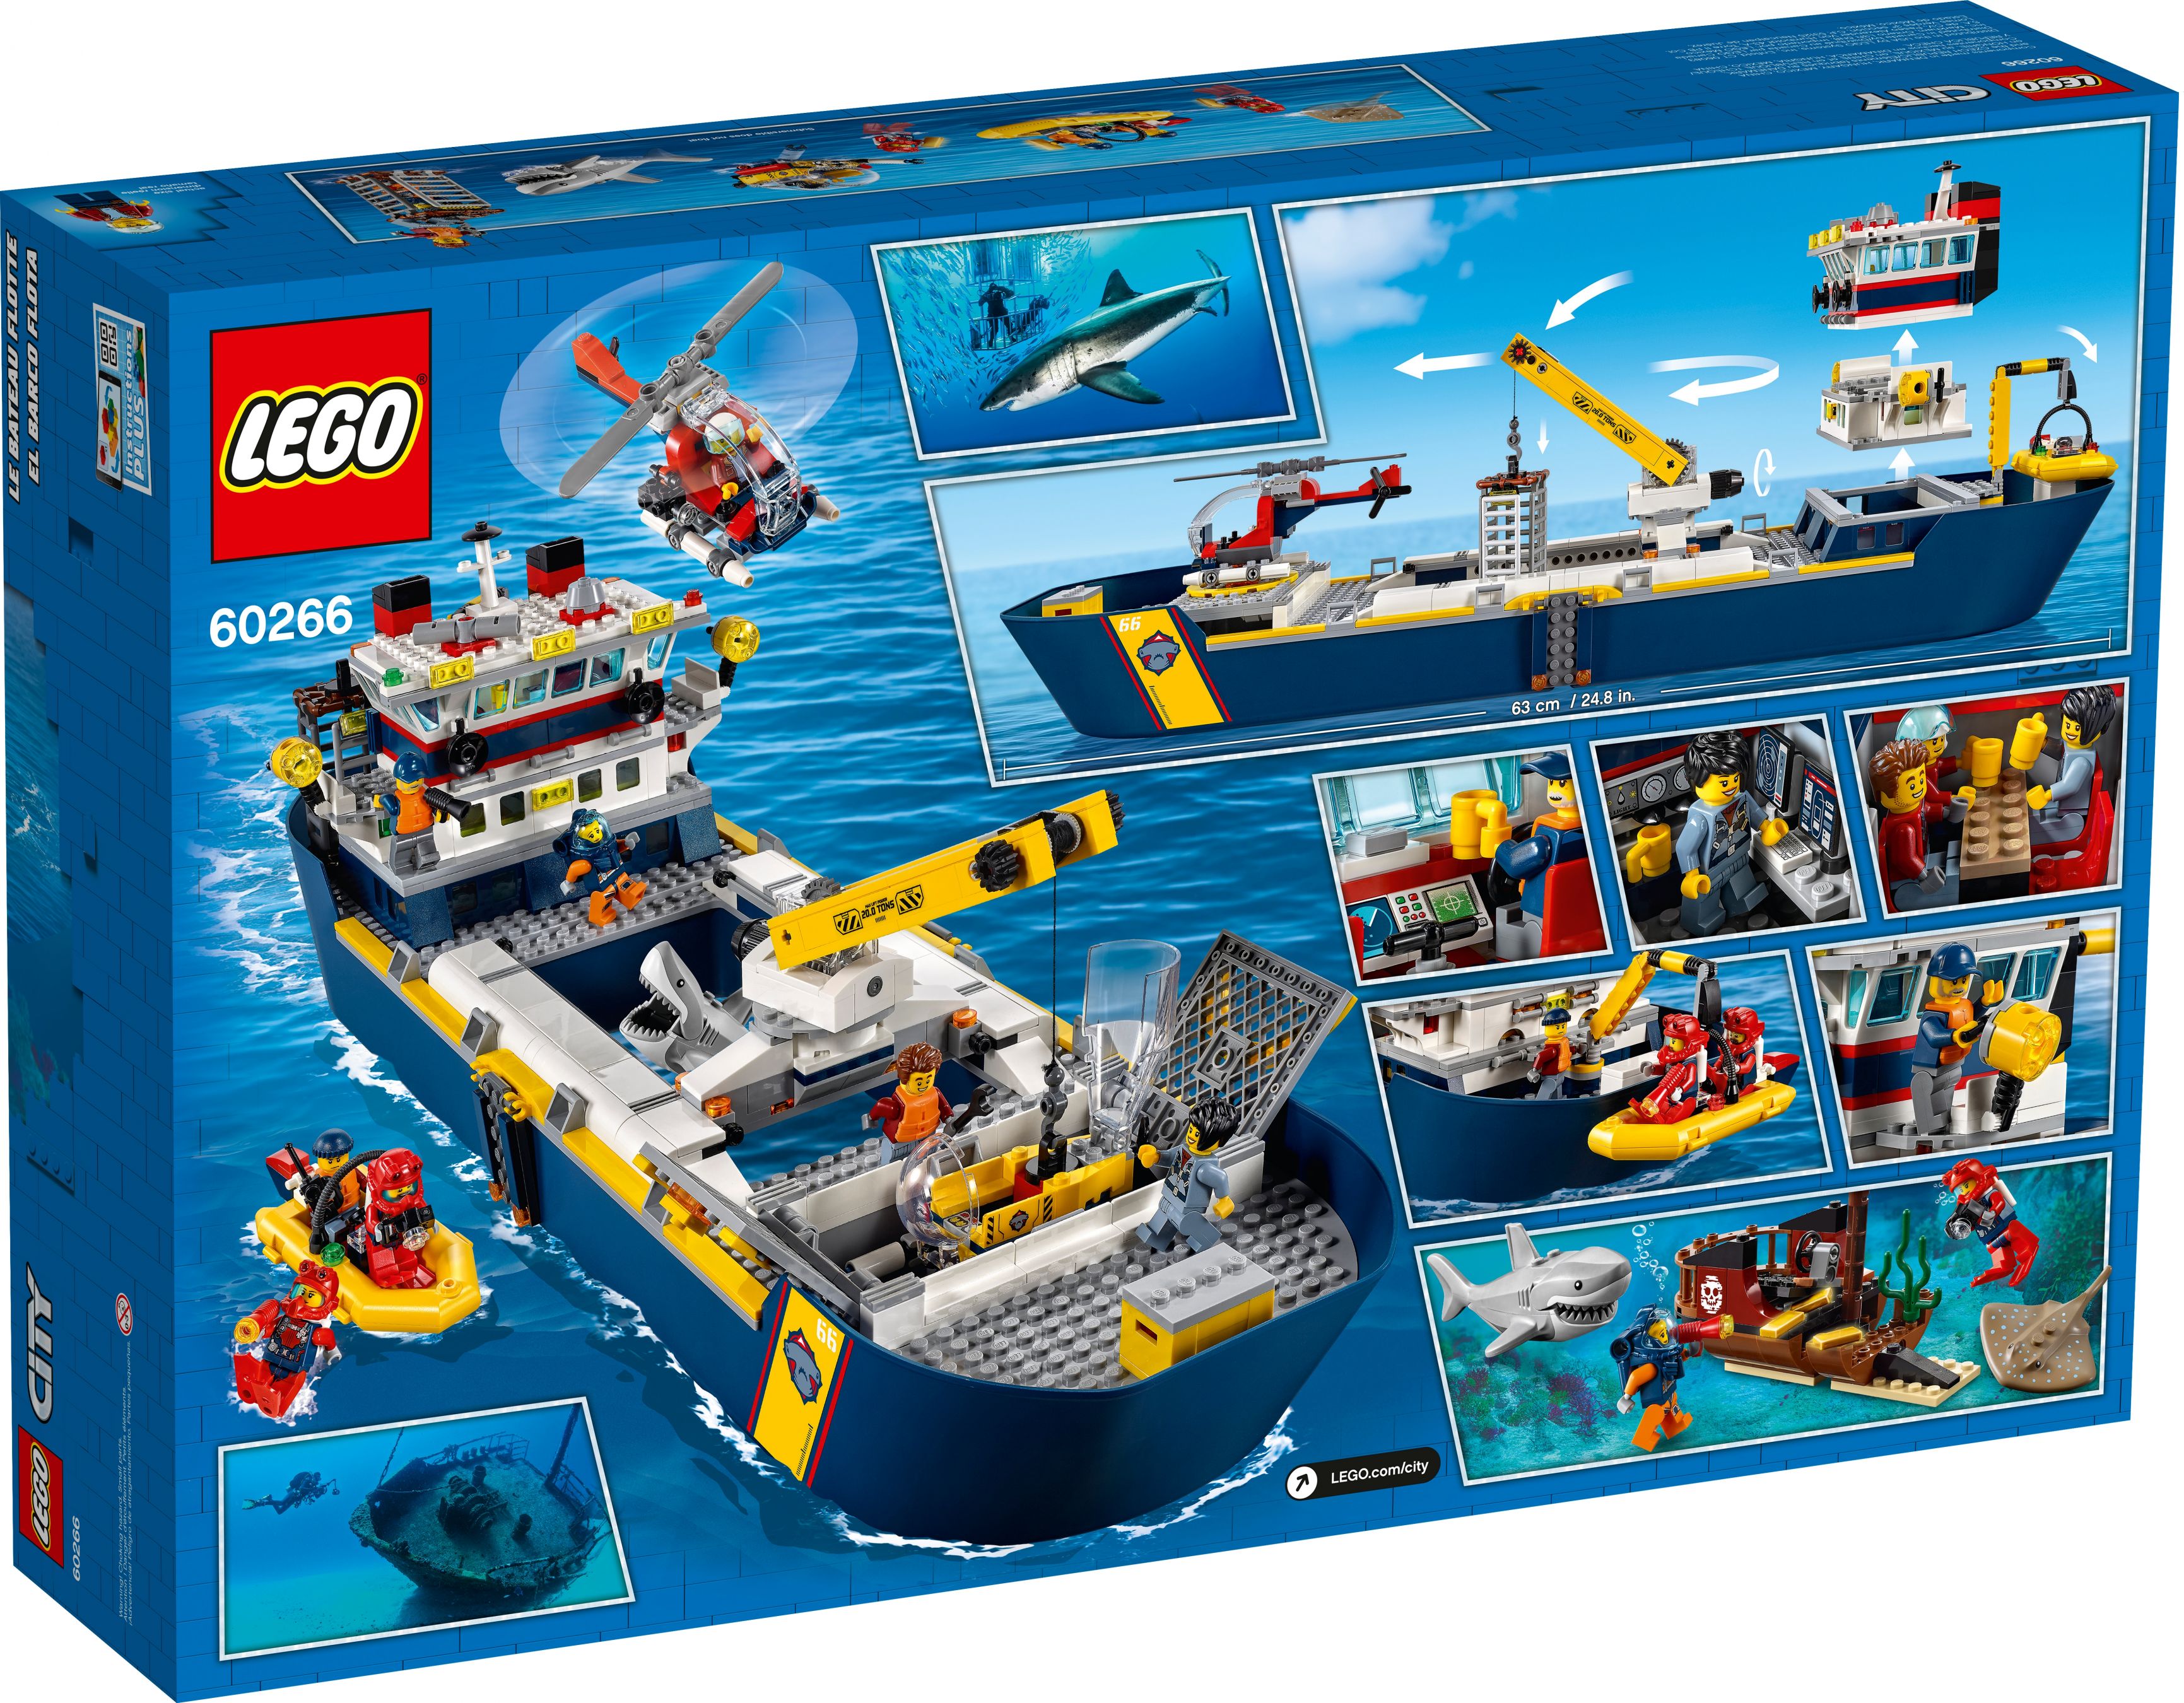 LEGO City 60266 Meeresforschungsschiff LEGO_60266_alt6.jpg